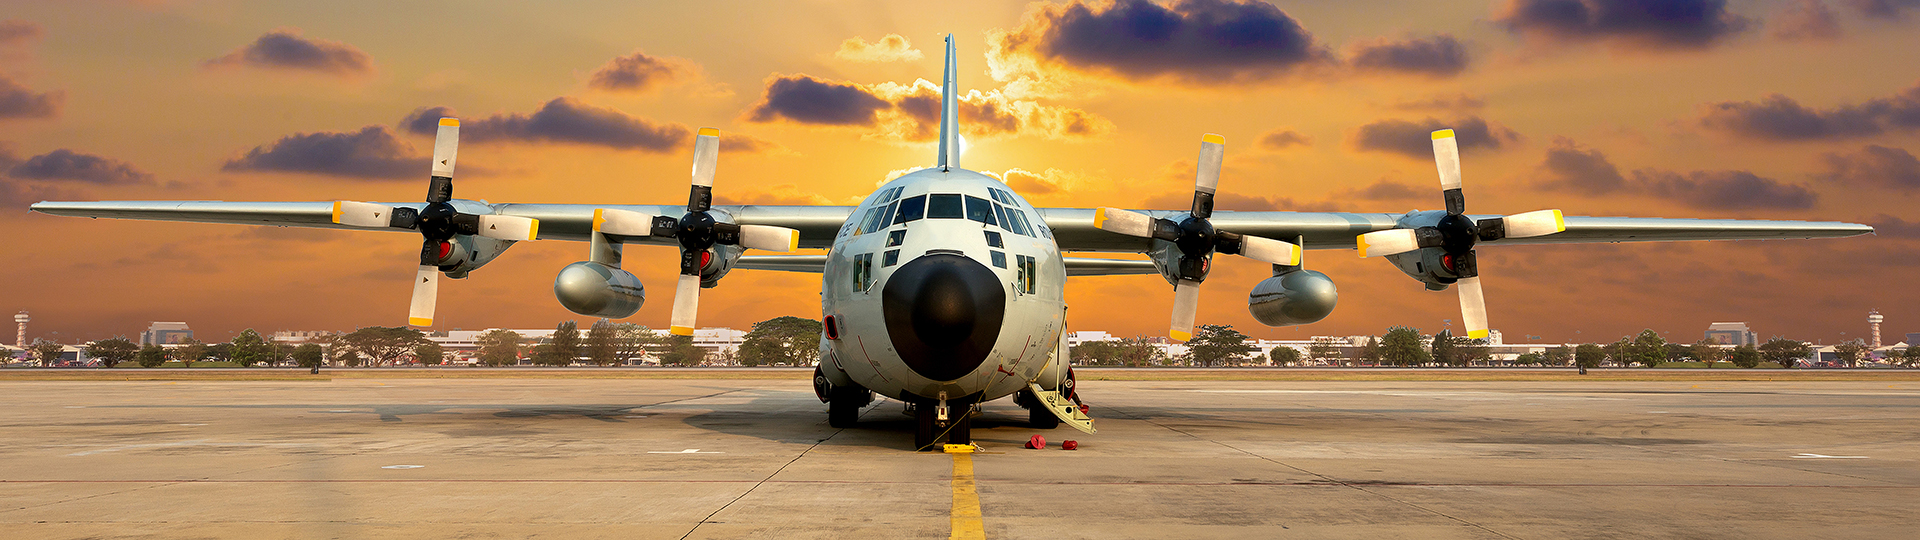 Lockheed Martin C-130 Transport Aircraft